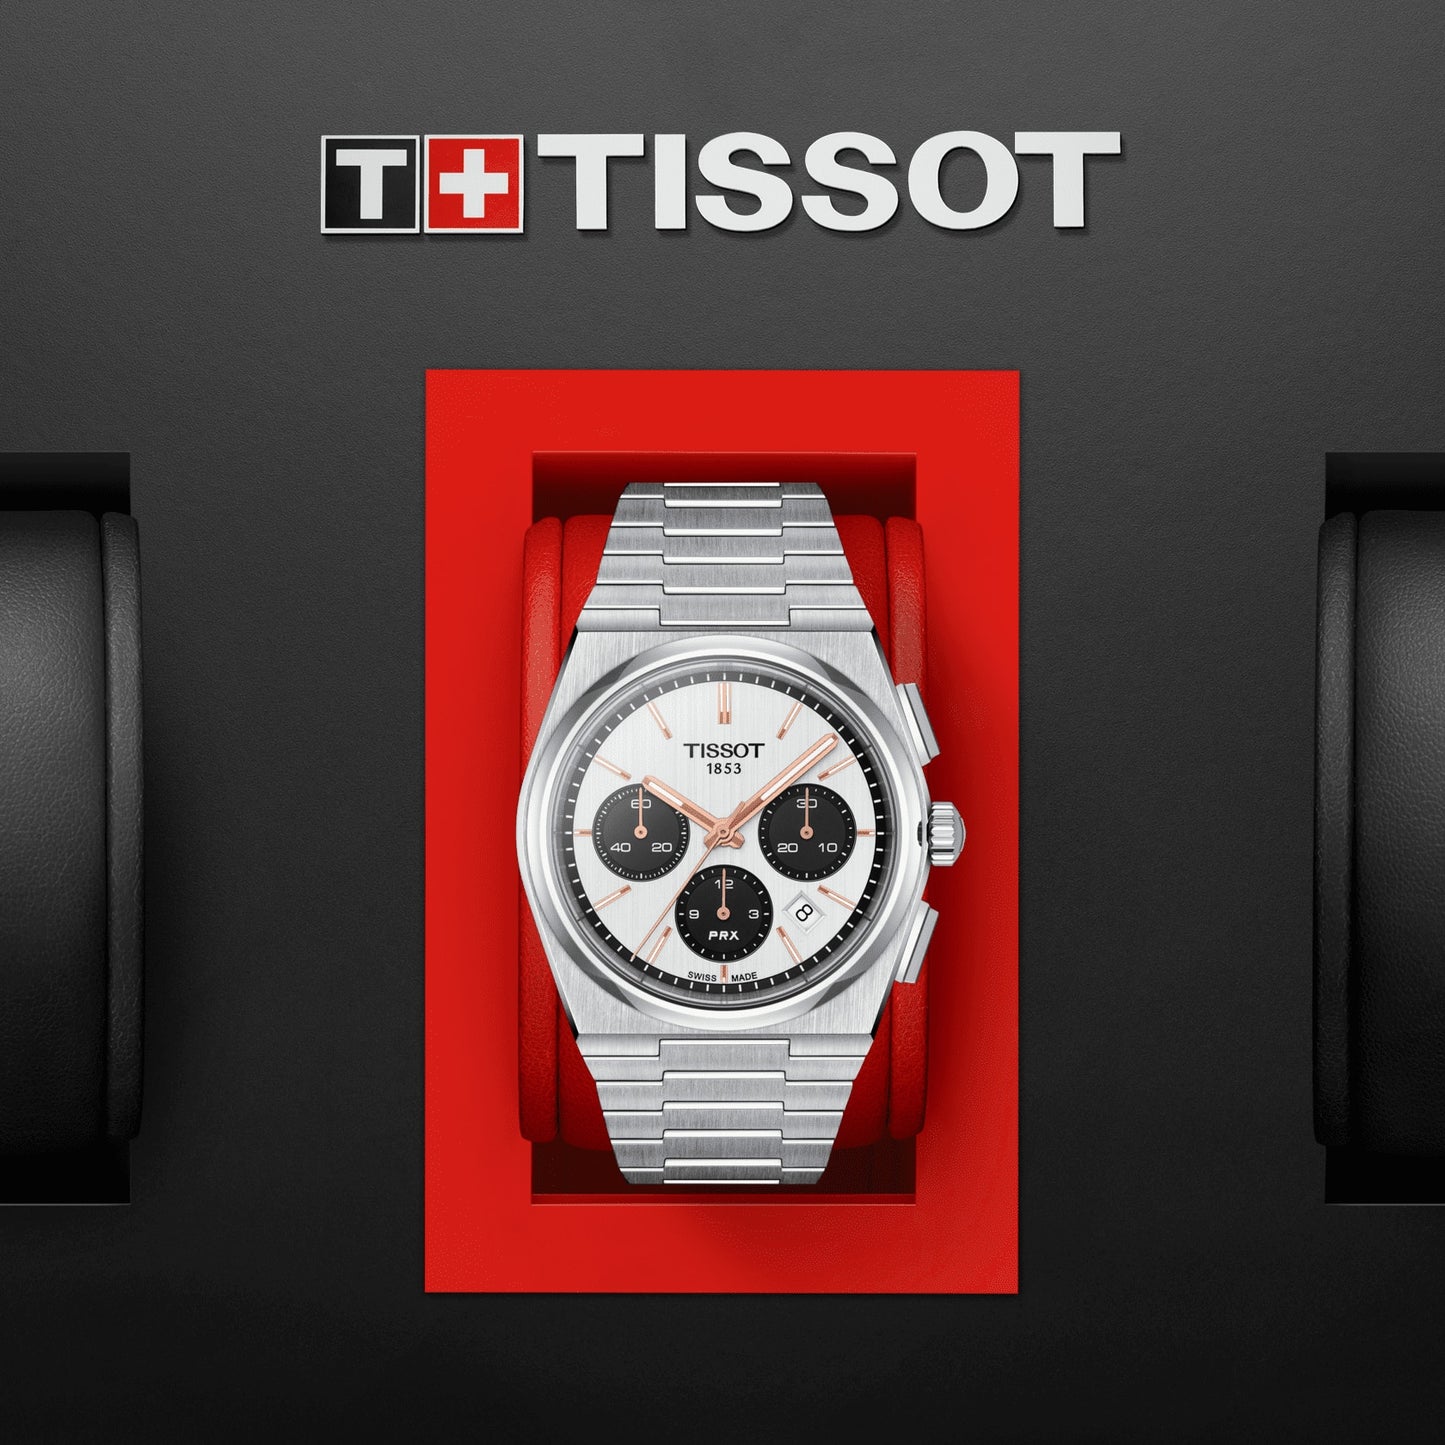 Tissot Prx Automatic Chronograph